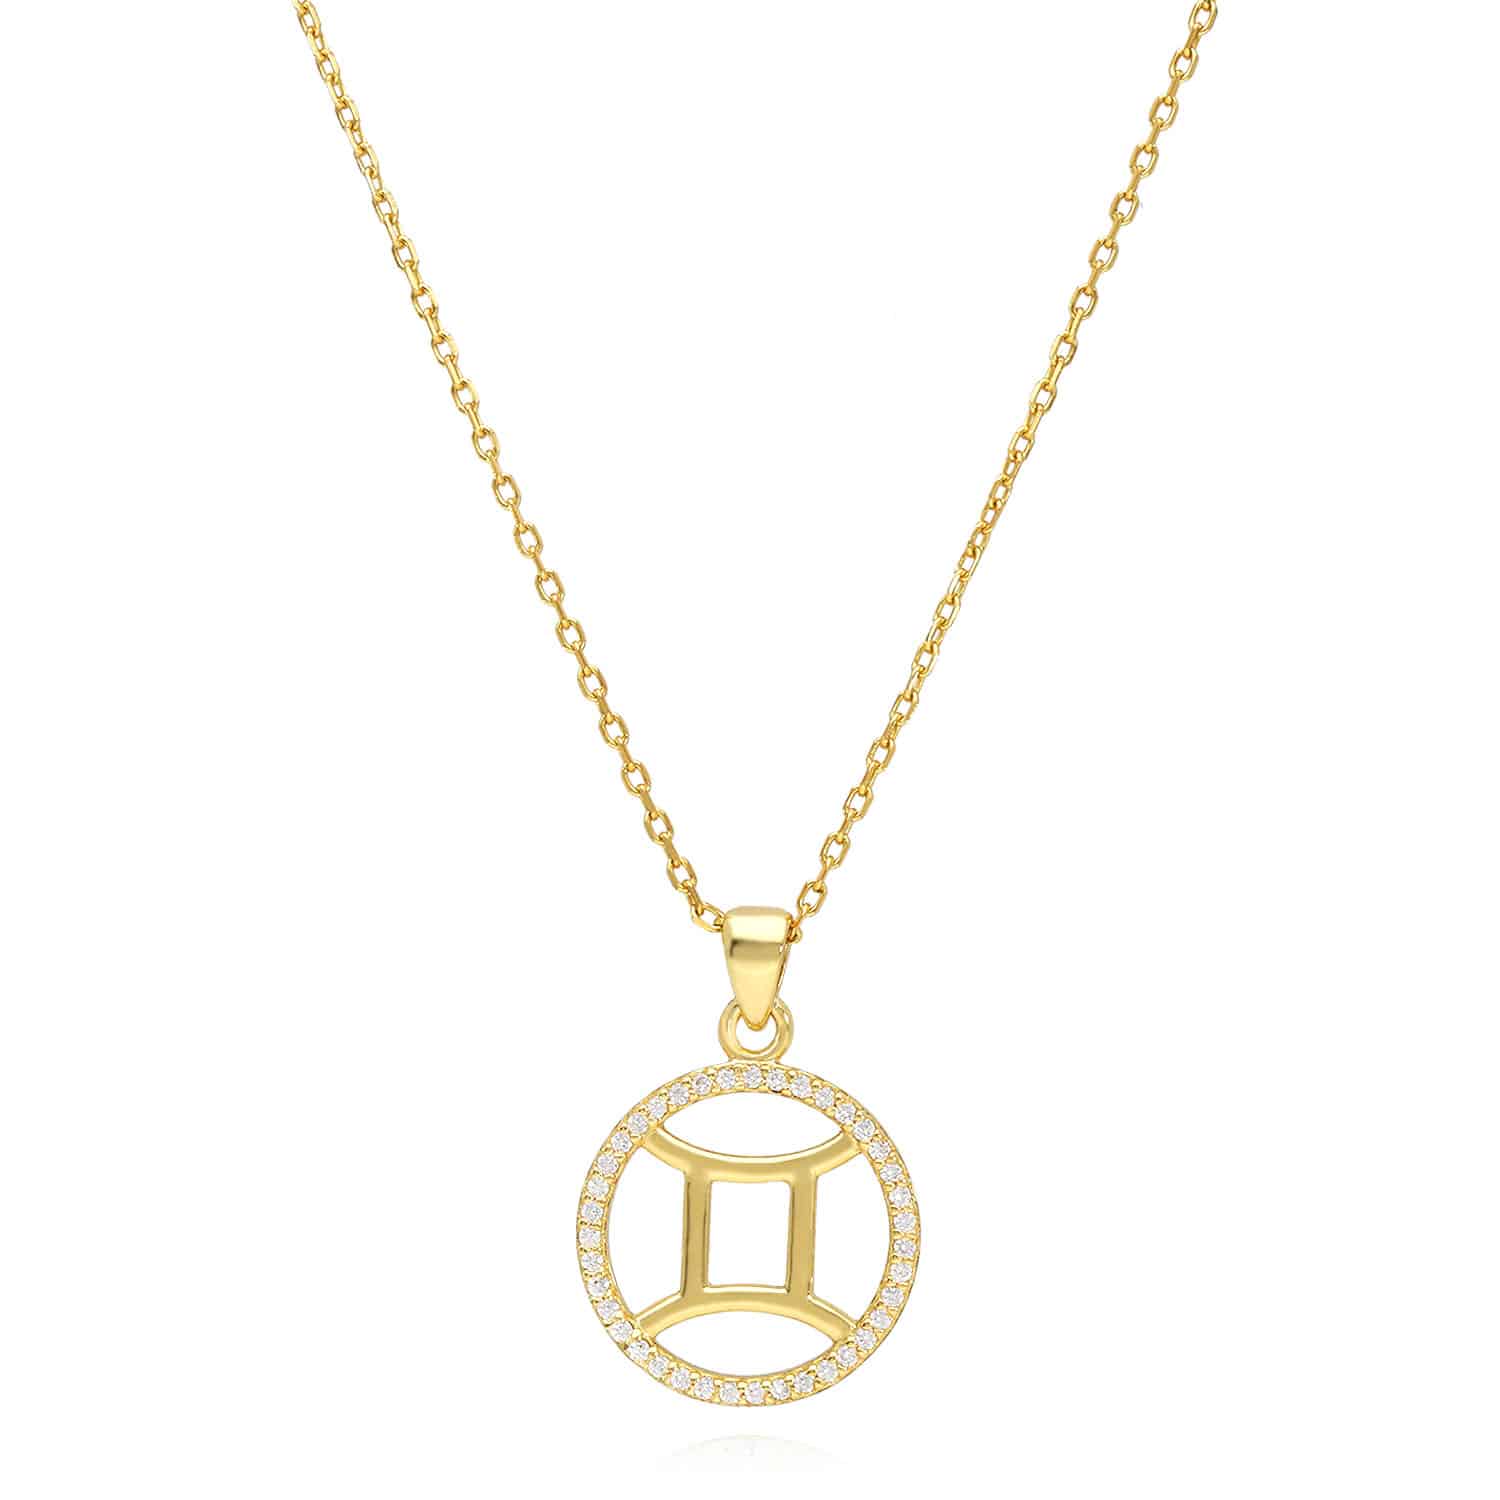 18K Gold Over Silver Simulated Diamond Zodiac Charm Pendant Necklace 16"-18" Adj - Gemini